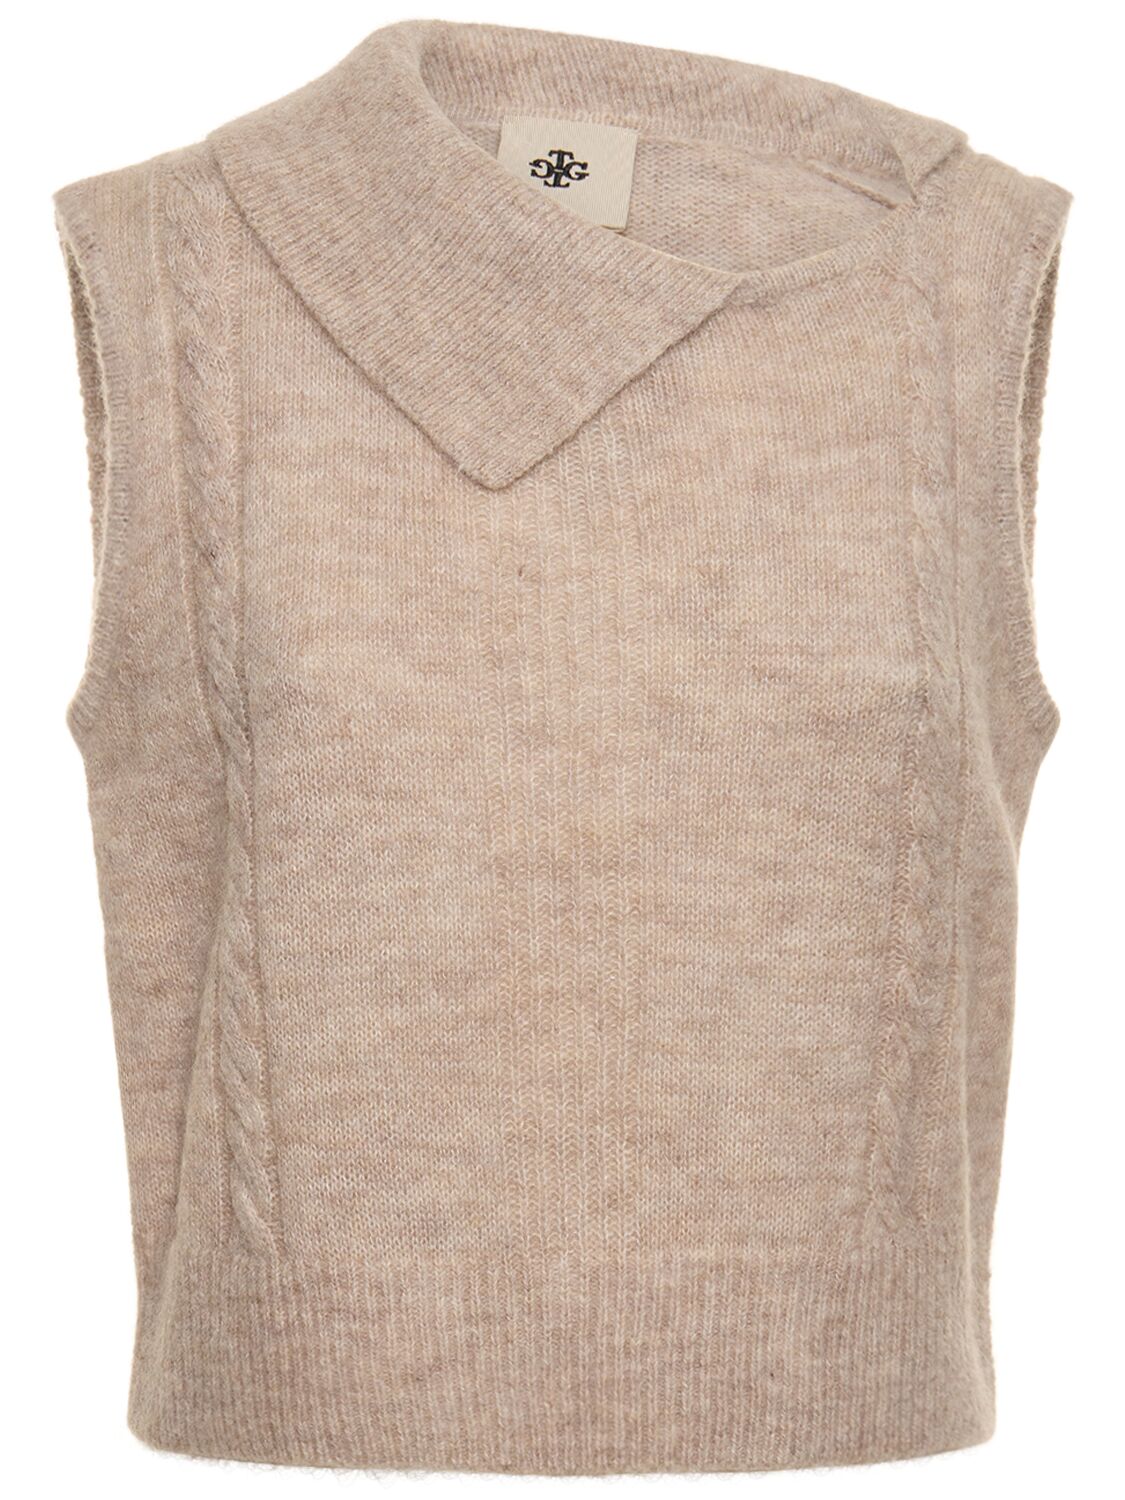 The Garment Verbier Knitted Vest In Linen